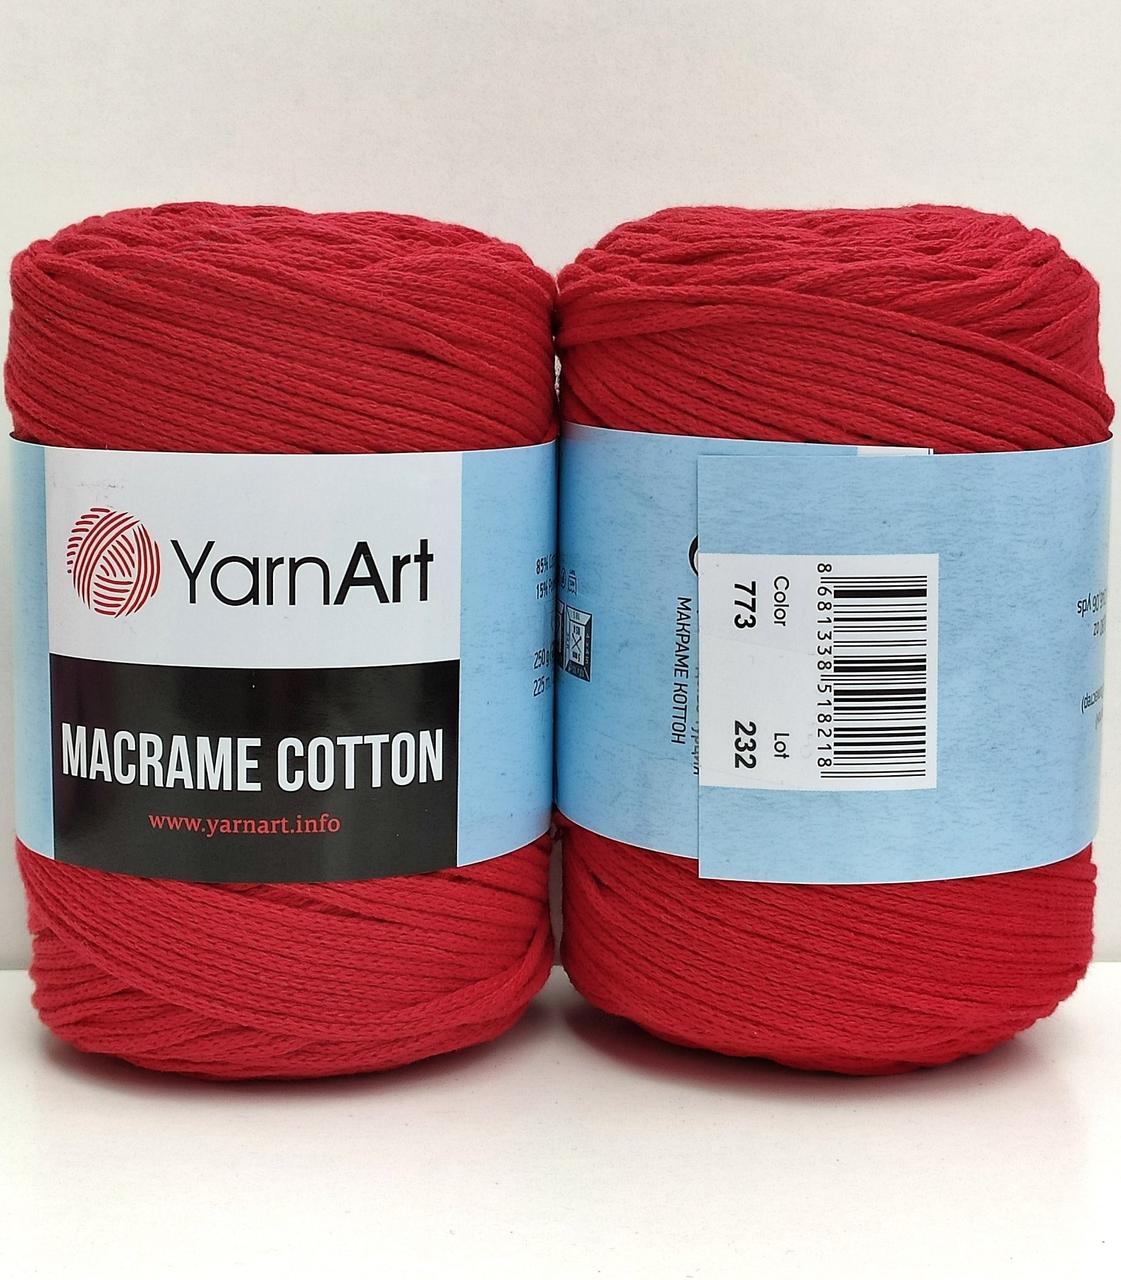 YarnArt Macrame Cotton 773 червоний